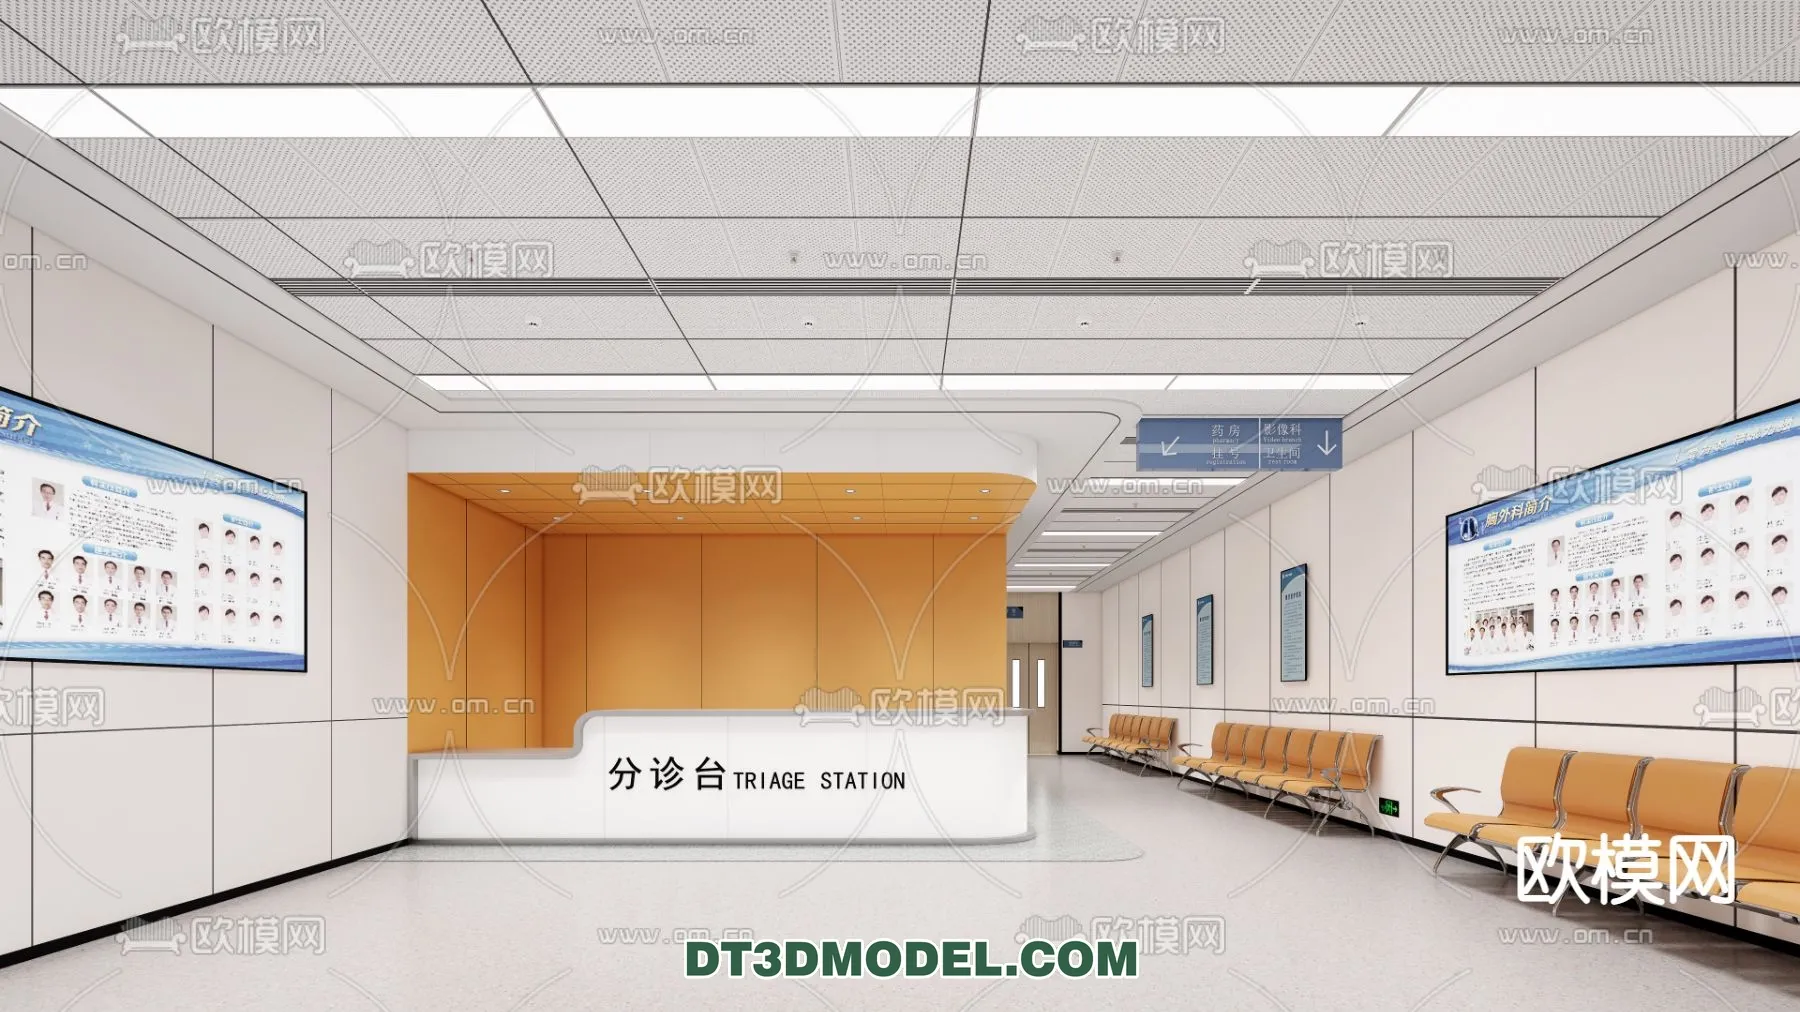 HOSPITAL 3D SCENES – MODERN – 0056